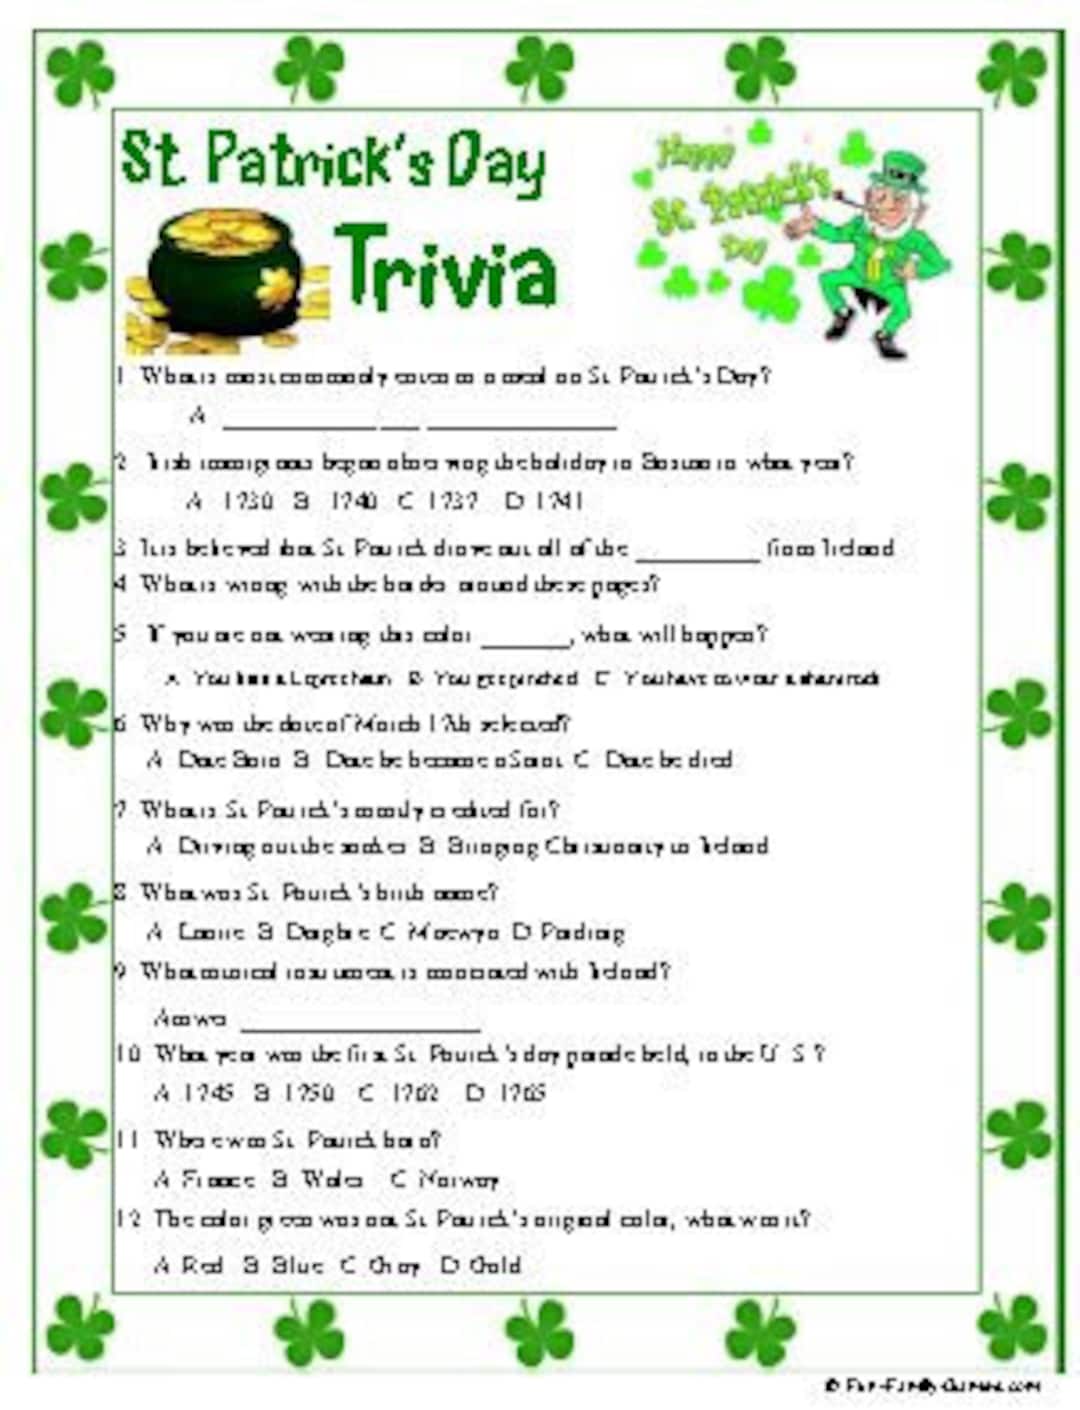 St Patrick's Day Trivia Etsy